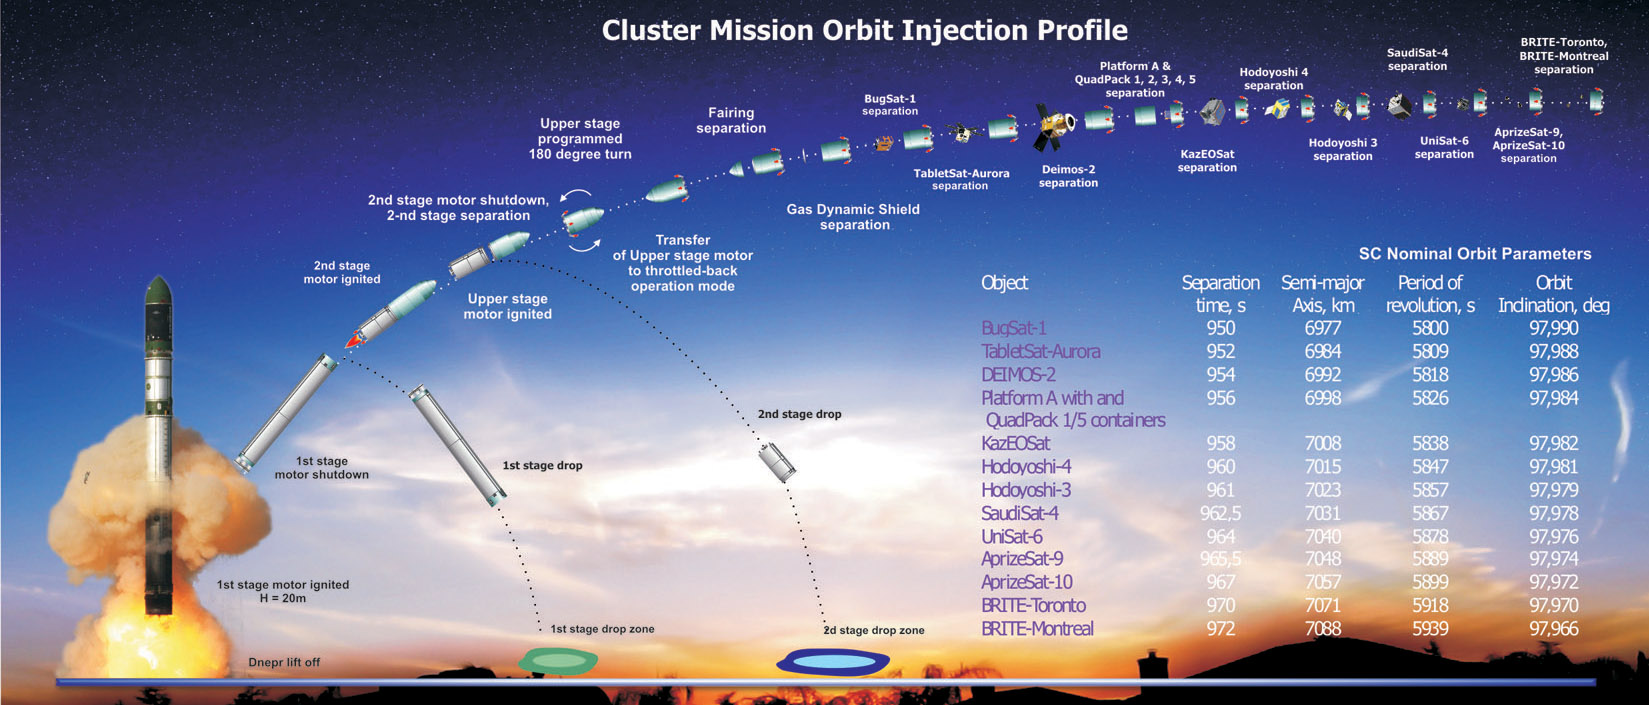 https://ukamsat.files.wordpress.com/2014/06/dnepr-cluster-mission-orbit-injection-profile-june-19-2014-credit-isc-kosmotras1.jpg